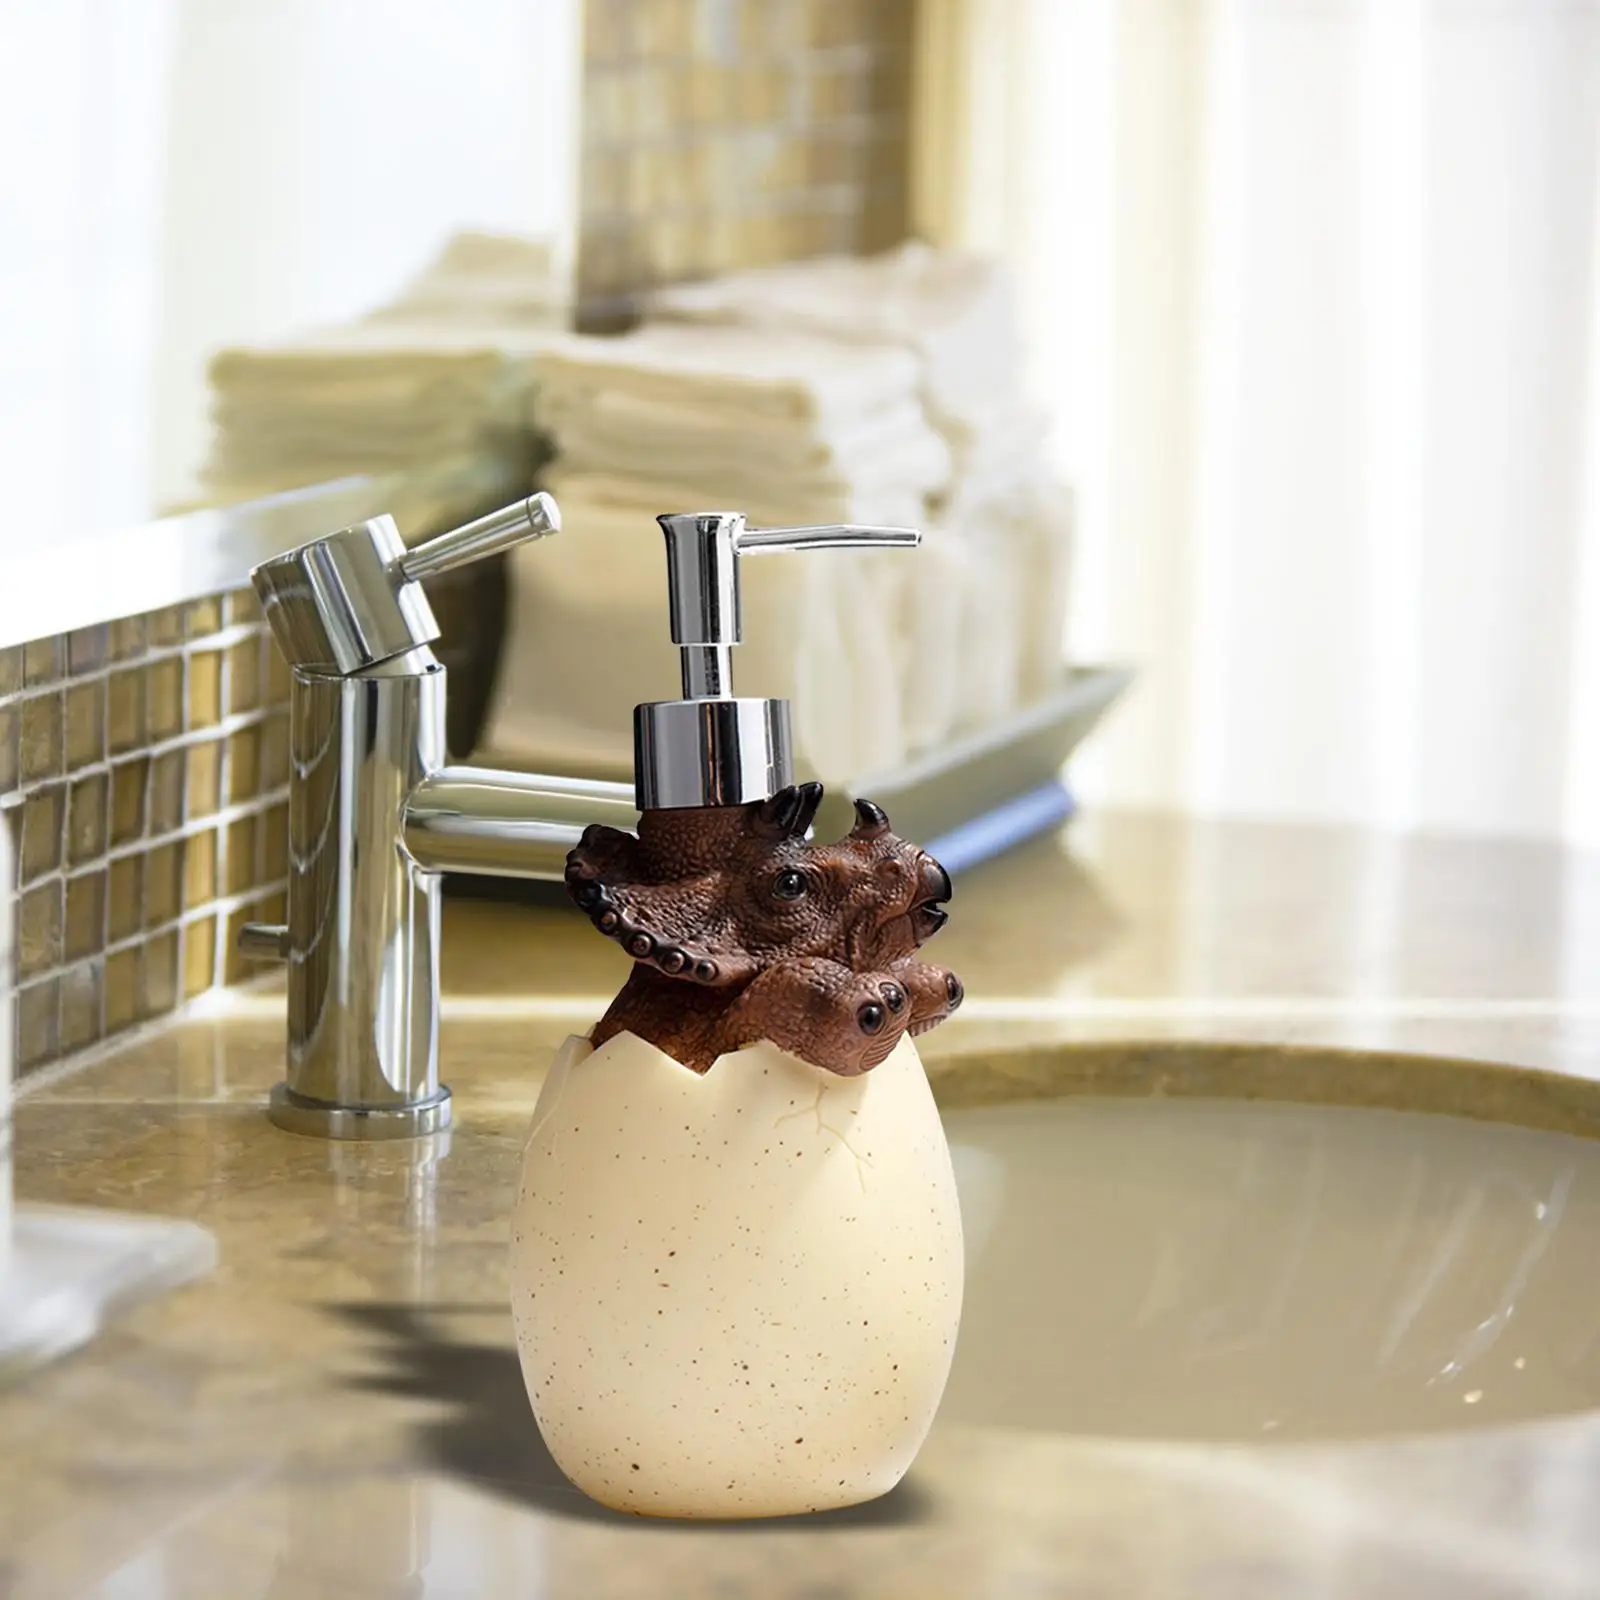 Cute Animal Soap Dispenser, 560ml Bath Accessory Refillable for Bathroom Decoration